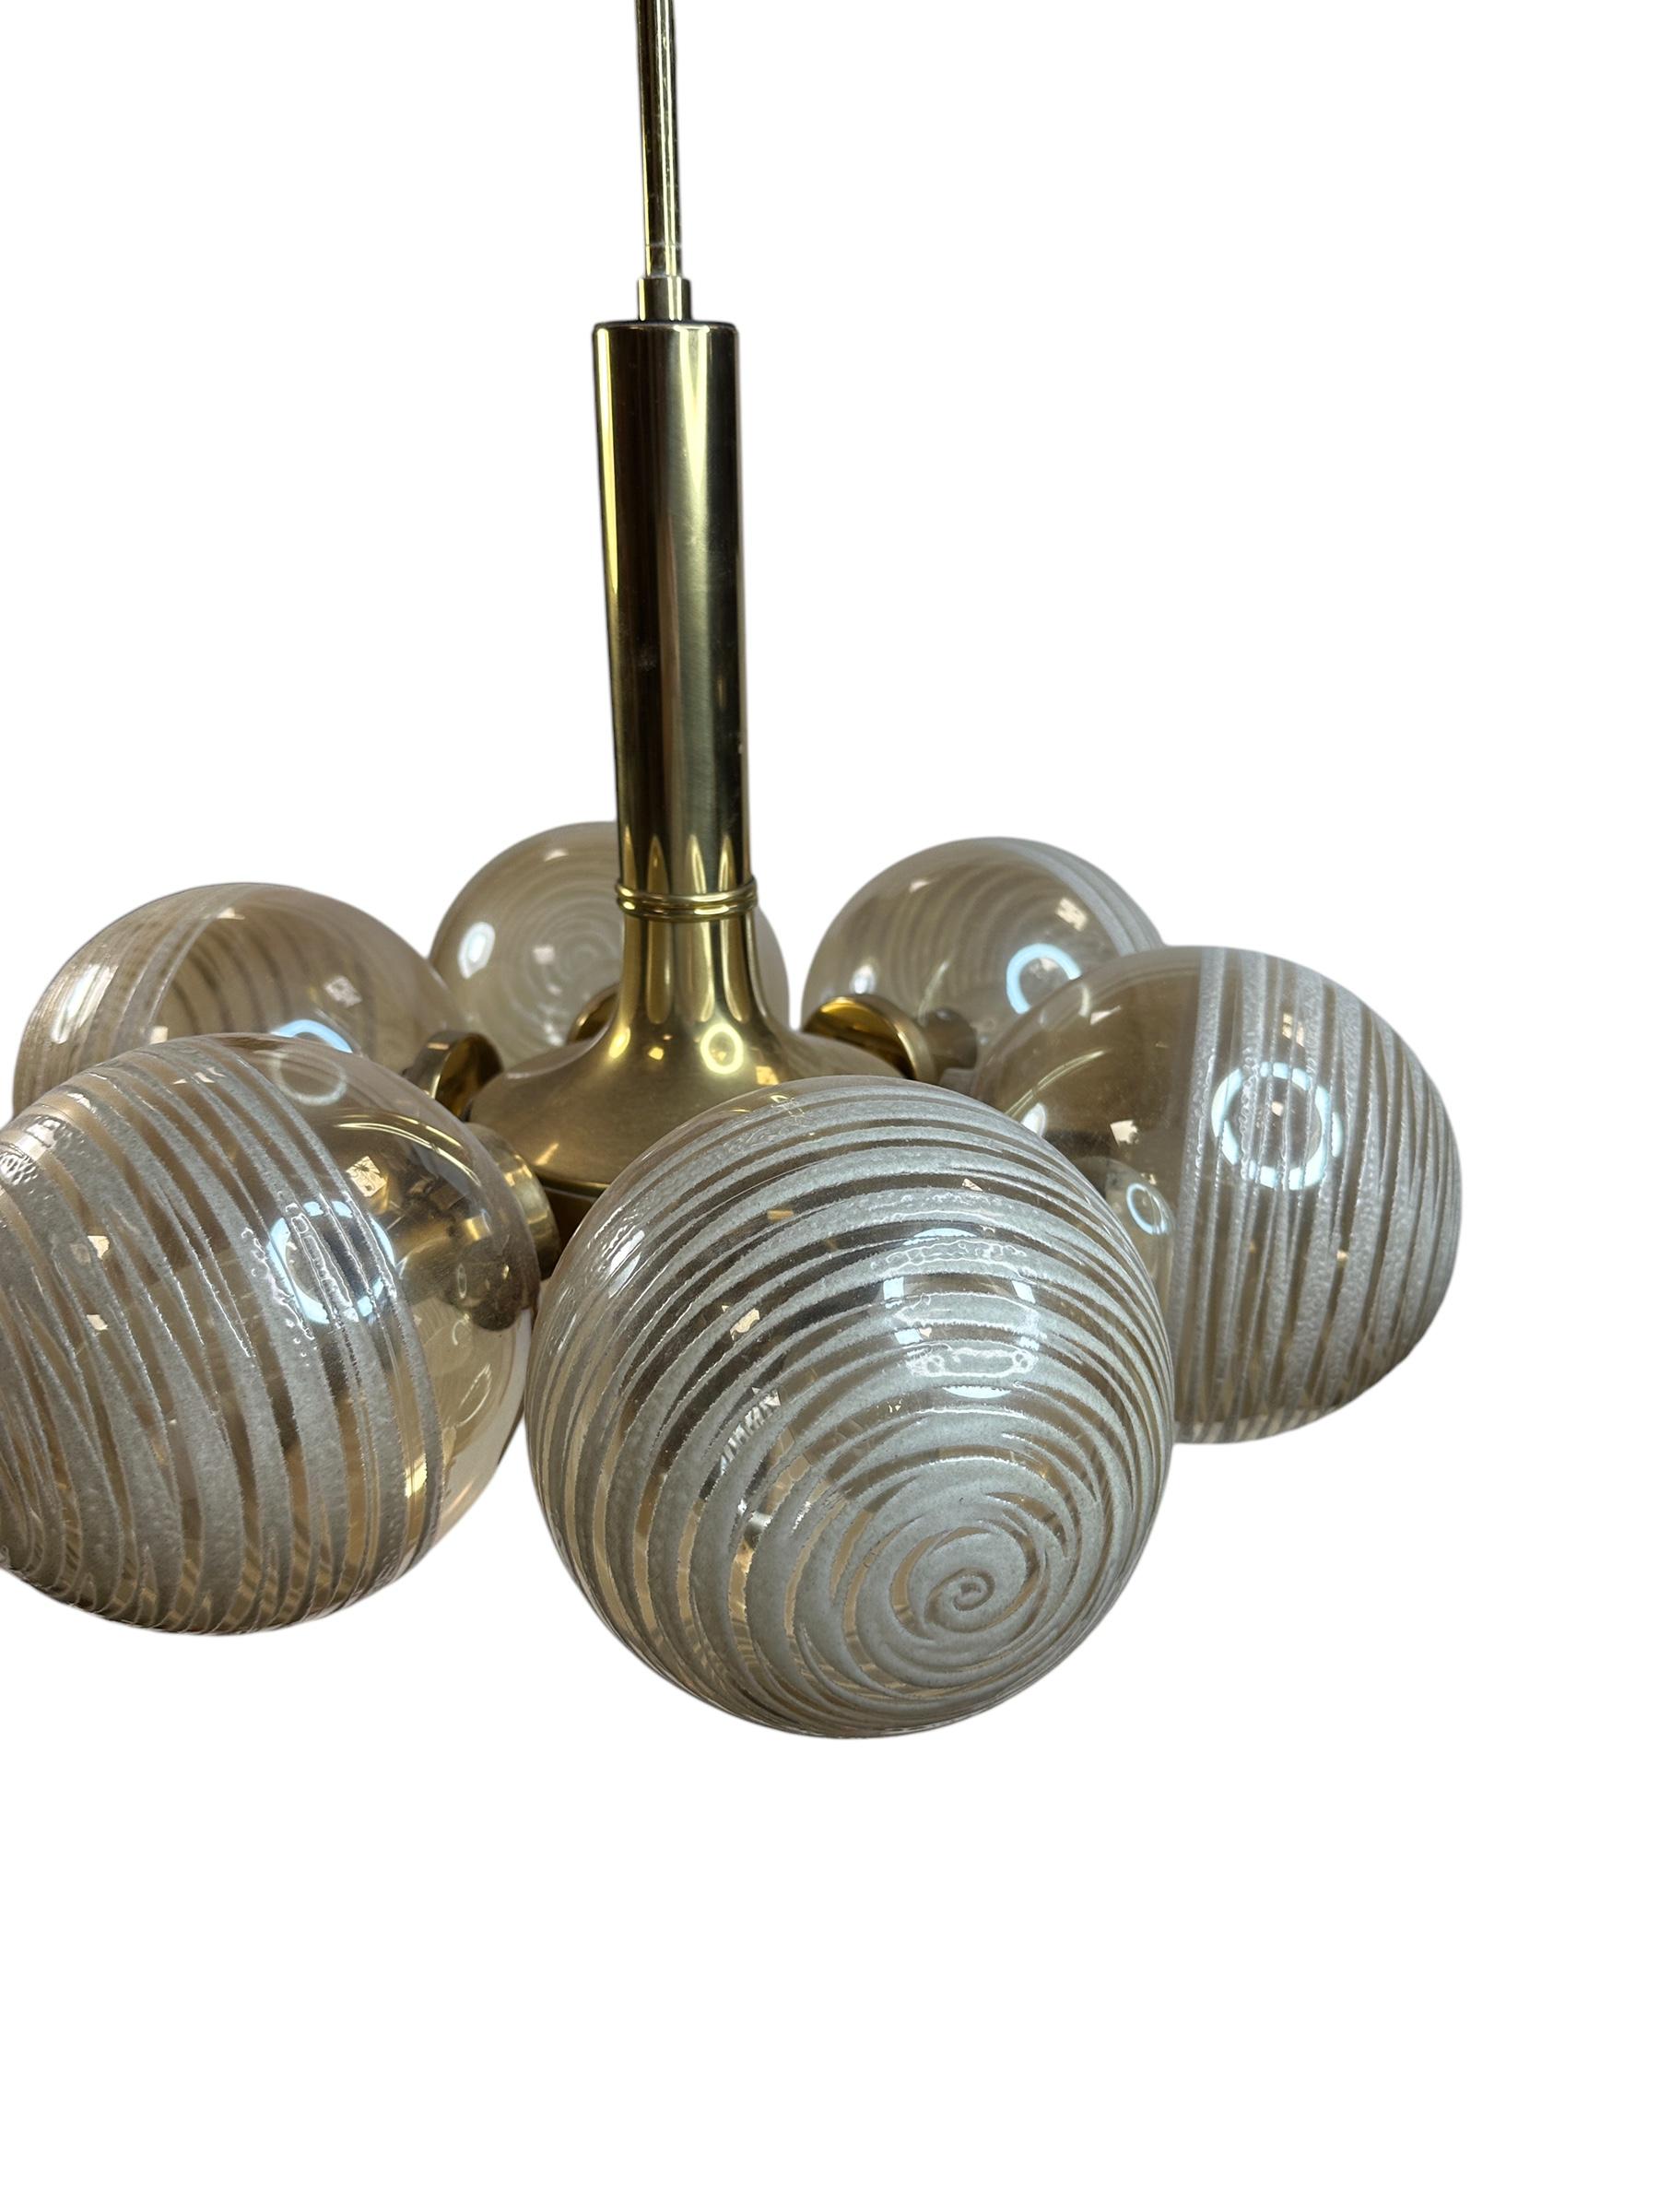 Late 20th Century 6 Light Sputnik Orbit Space Age Brass Swirl Glass Ball Chandelier Germany, 1970s For Sale